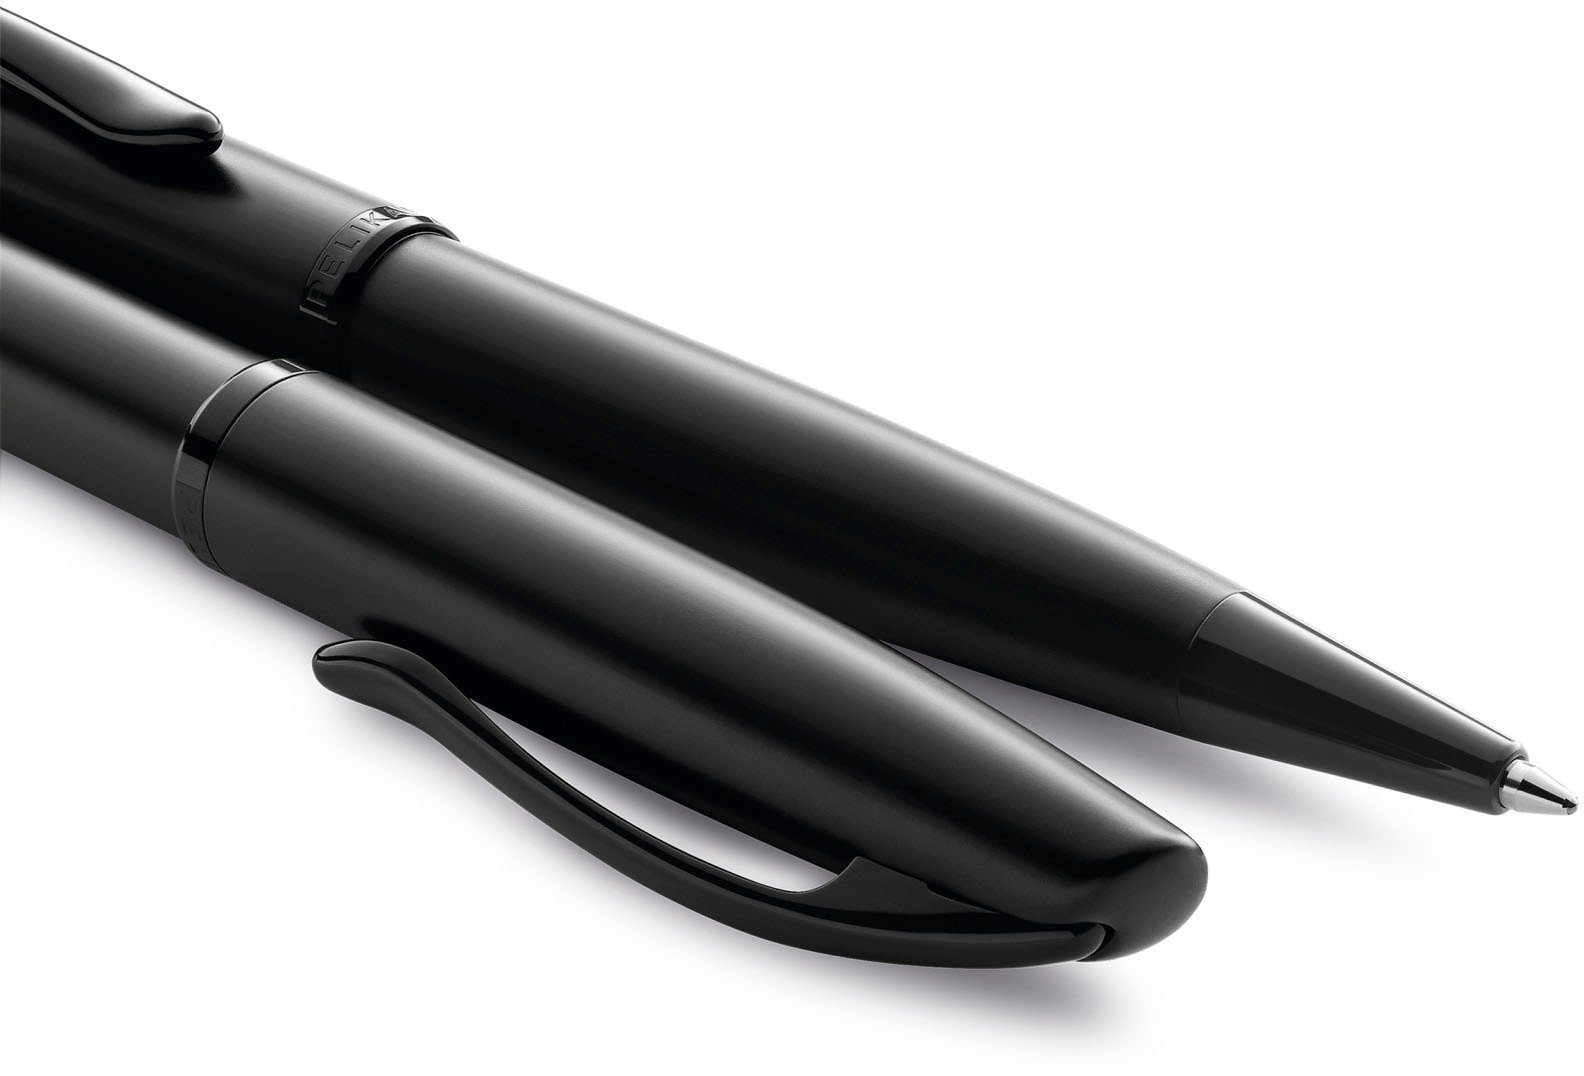 Drehkugelschreiber Pelikan carbon K36 Jazz® Elegance, schwarz Noble